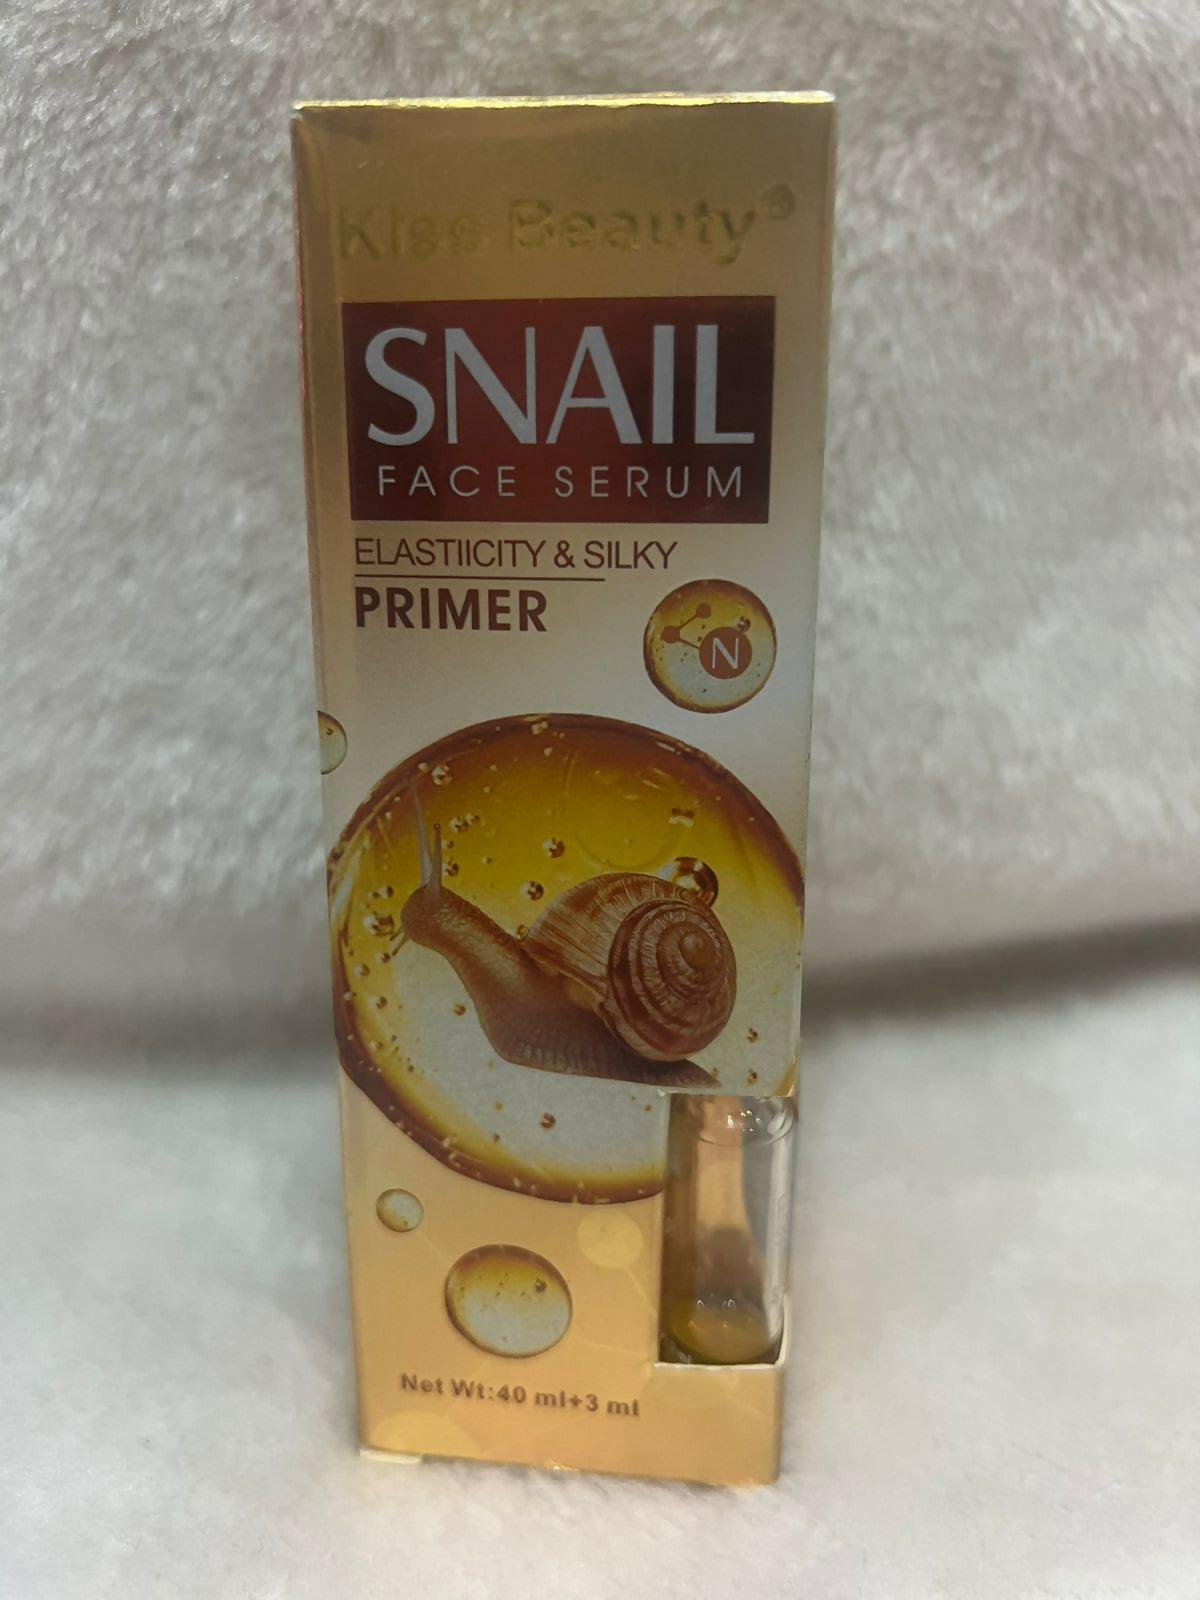 Kiss Beauty Snail Serum Elasticity & Silky Primer - ValueBox